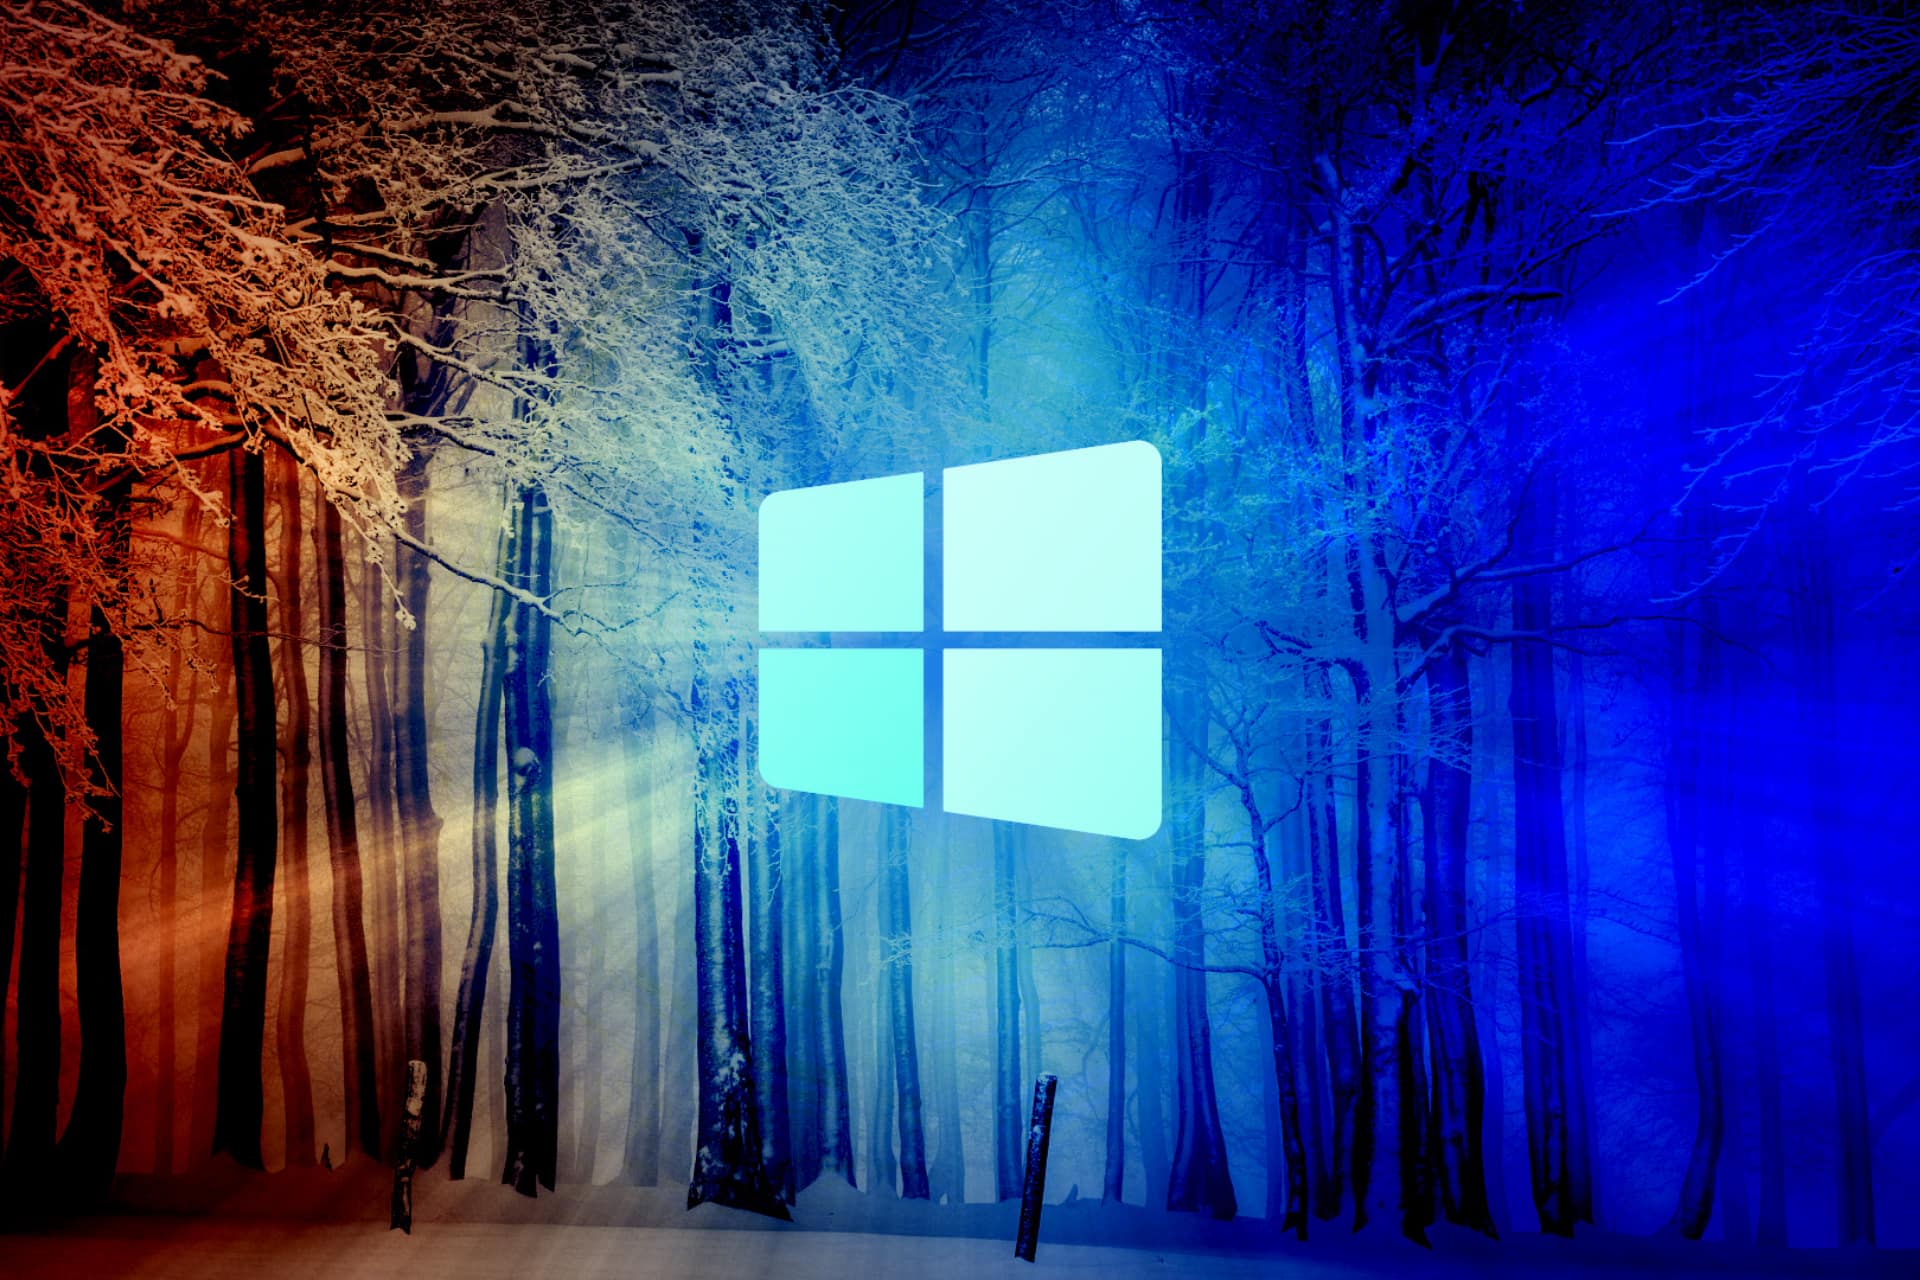 Microsoft has finally released Windows 10 21H1